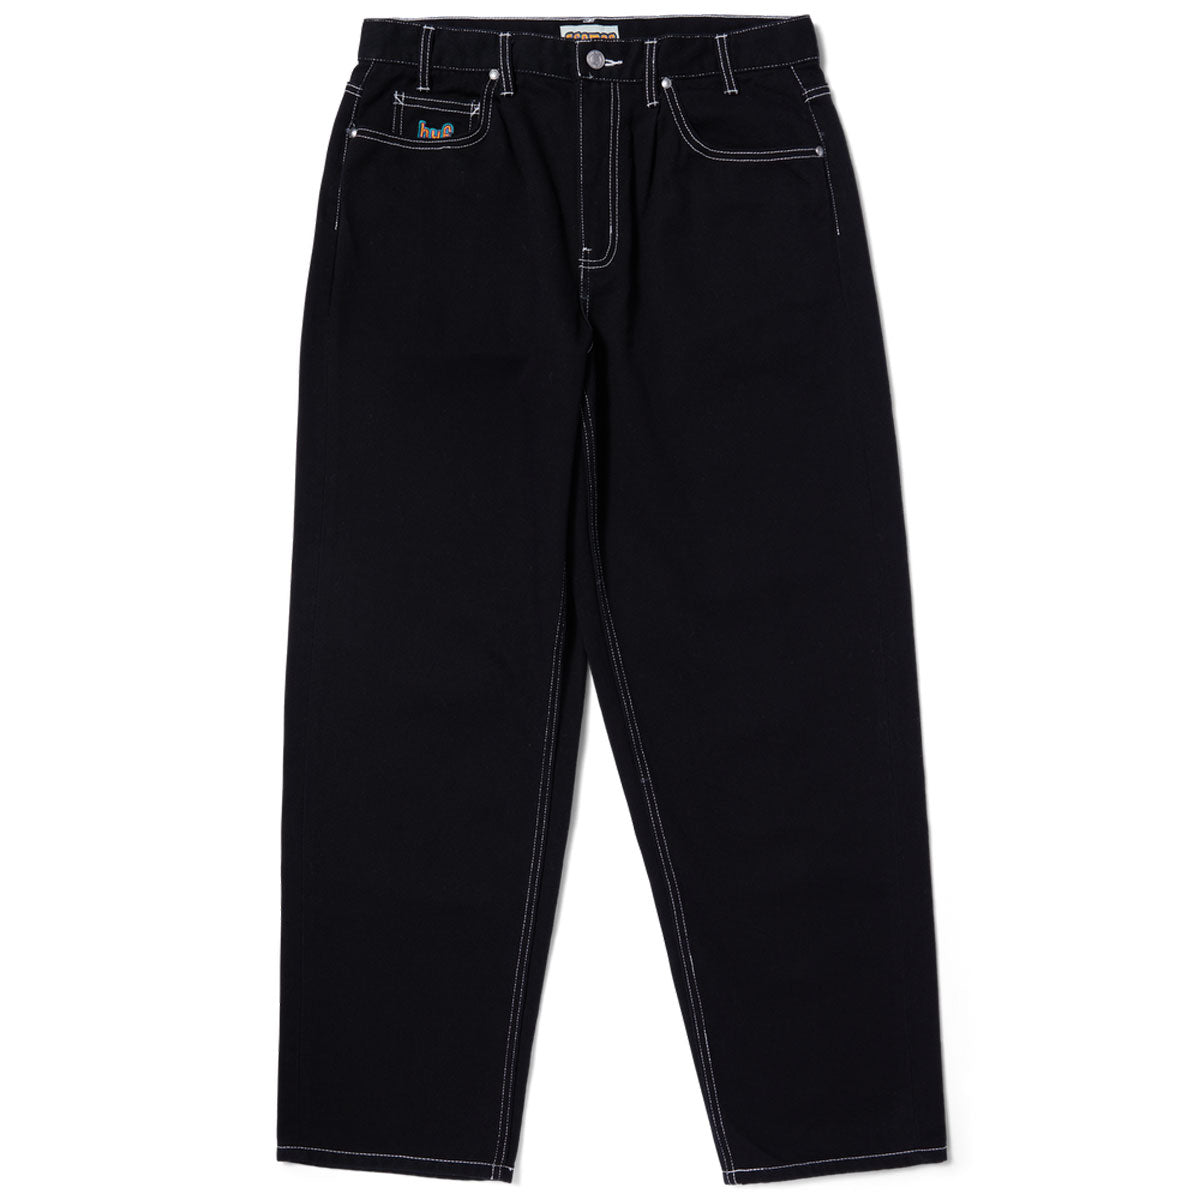 HUF Cromer Pants - Black/White image 1